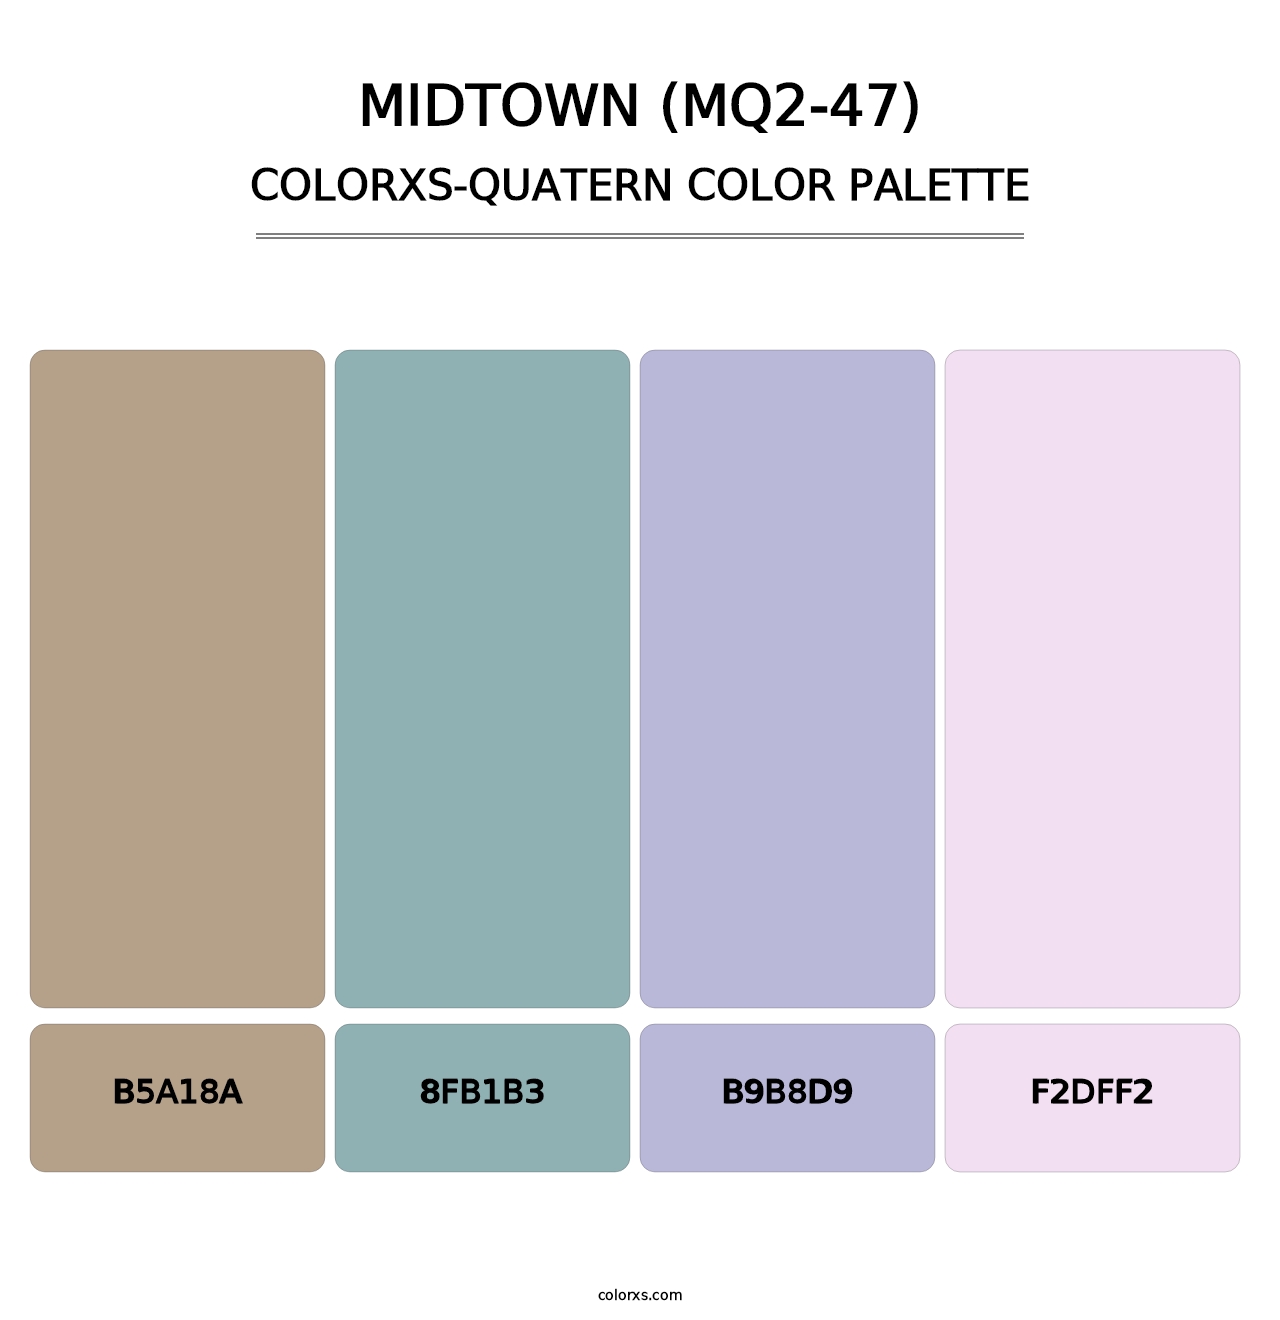 Midtown (MQ2-47) - Colorxs Quatern Palette